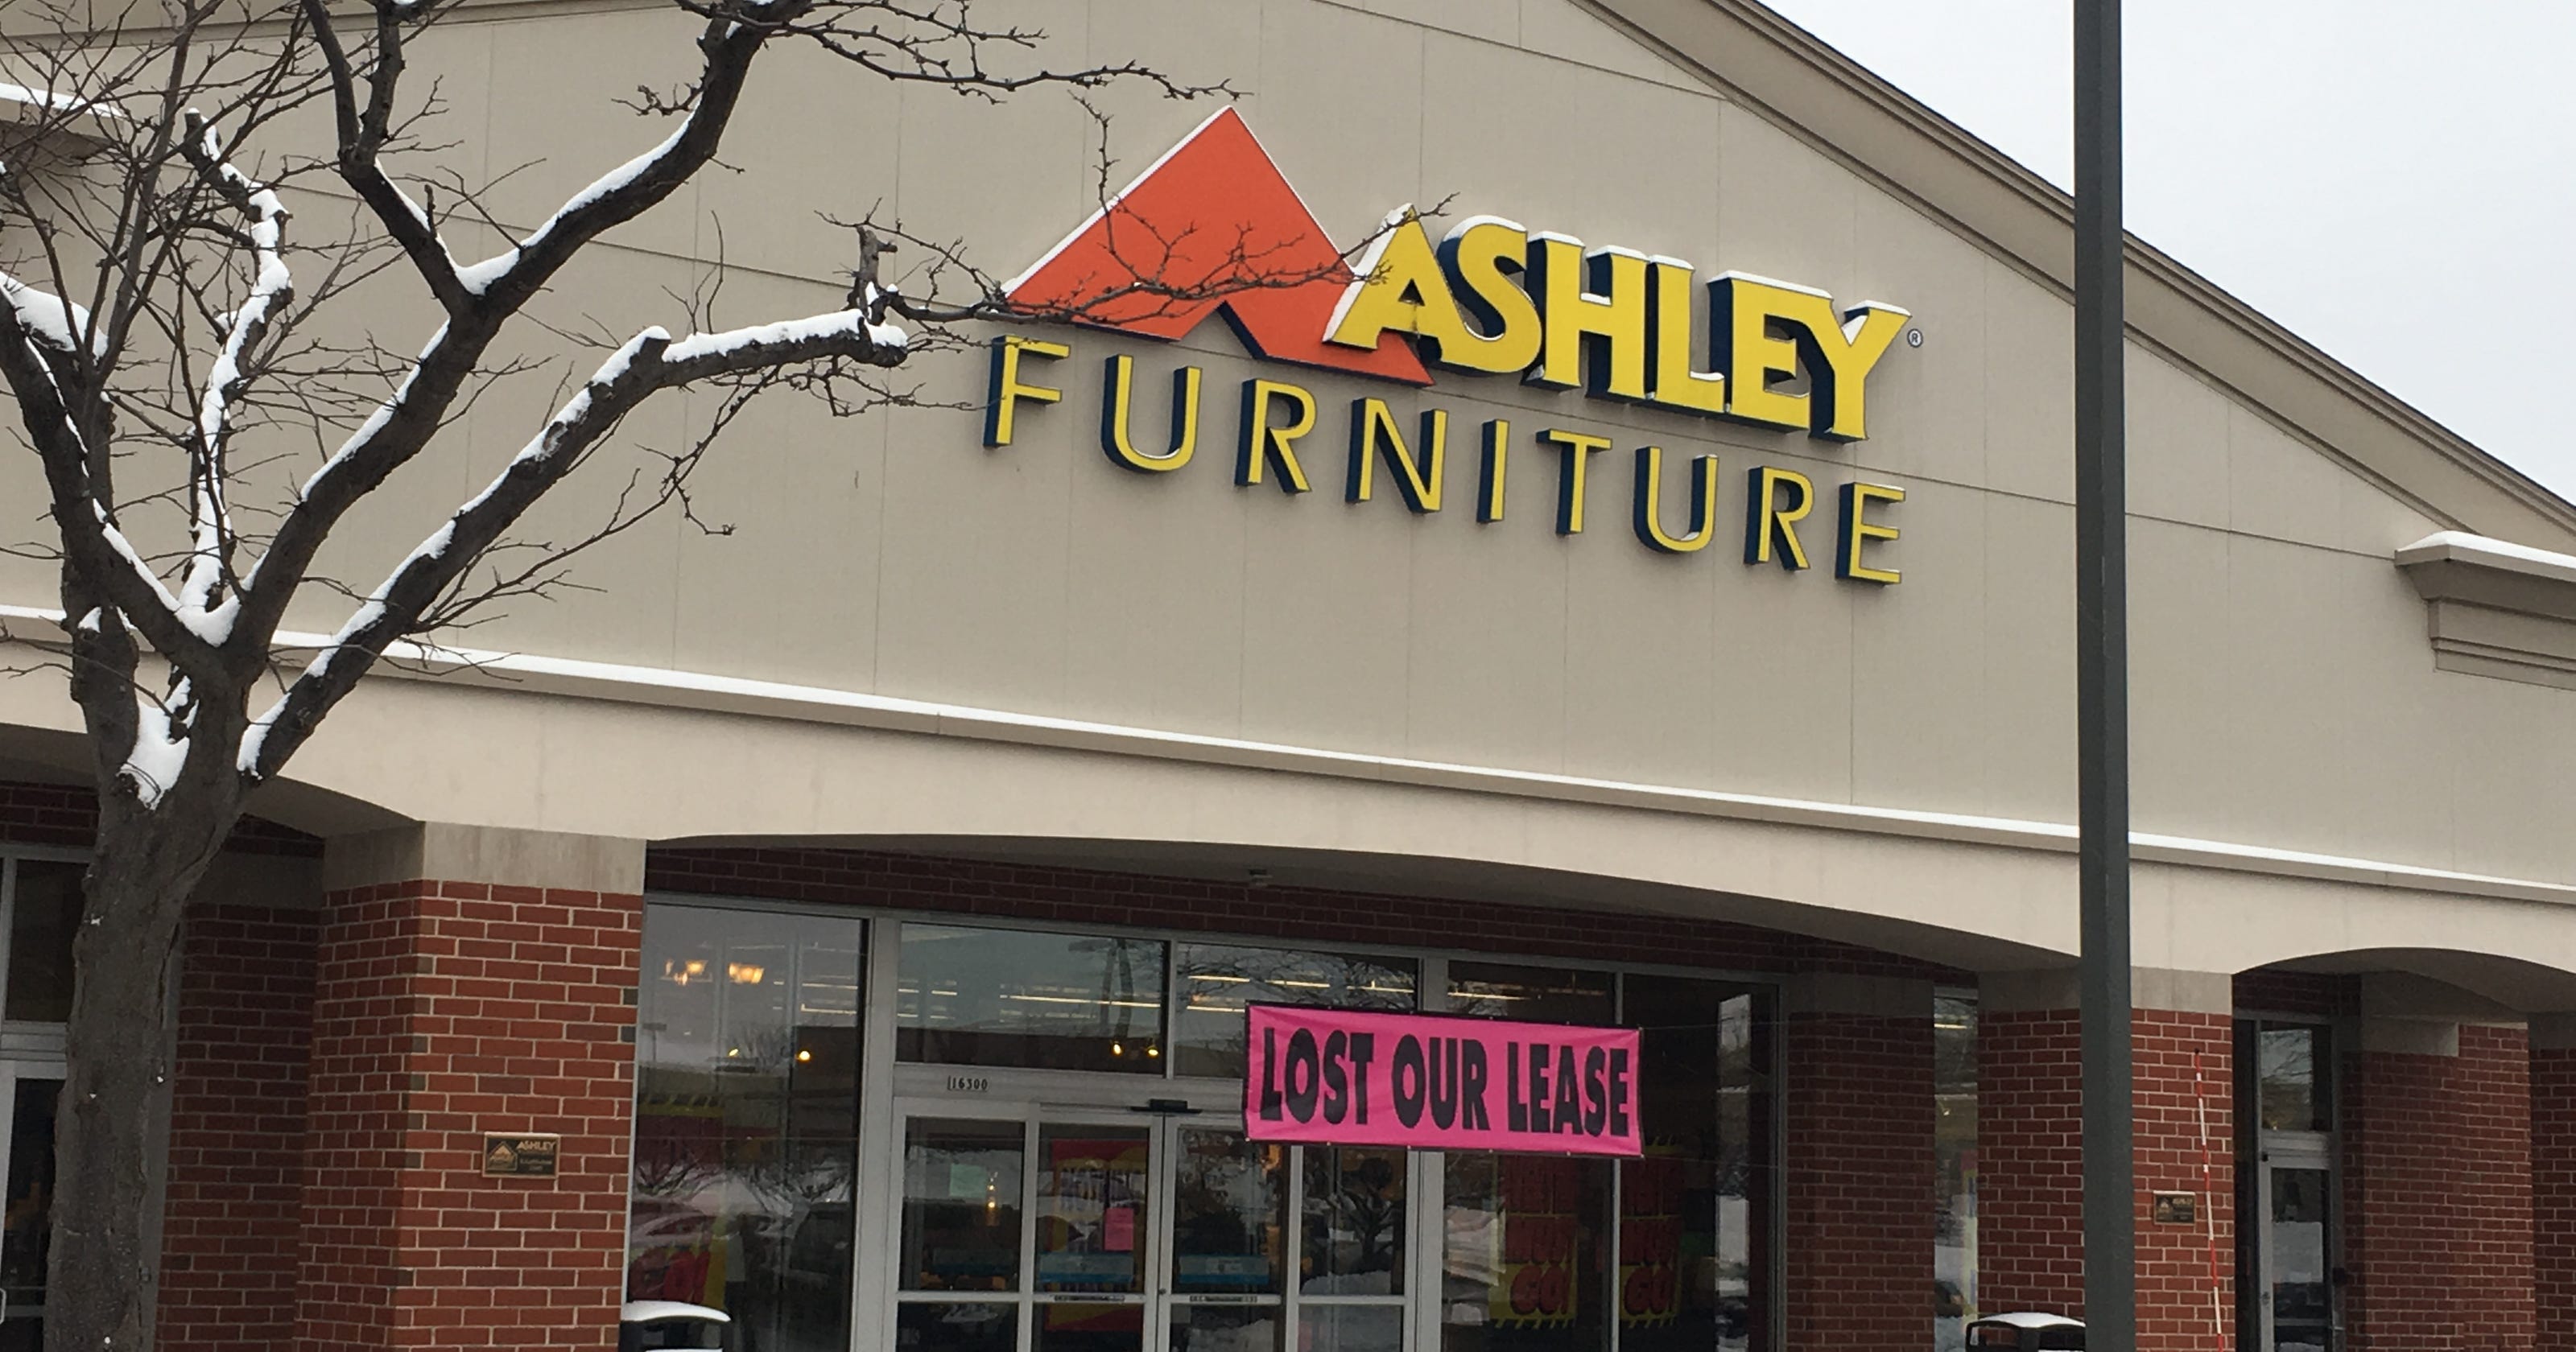 Wisconsin S Fonti Family Buying Milwaukee Area Ashley Stores